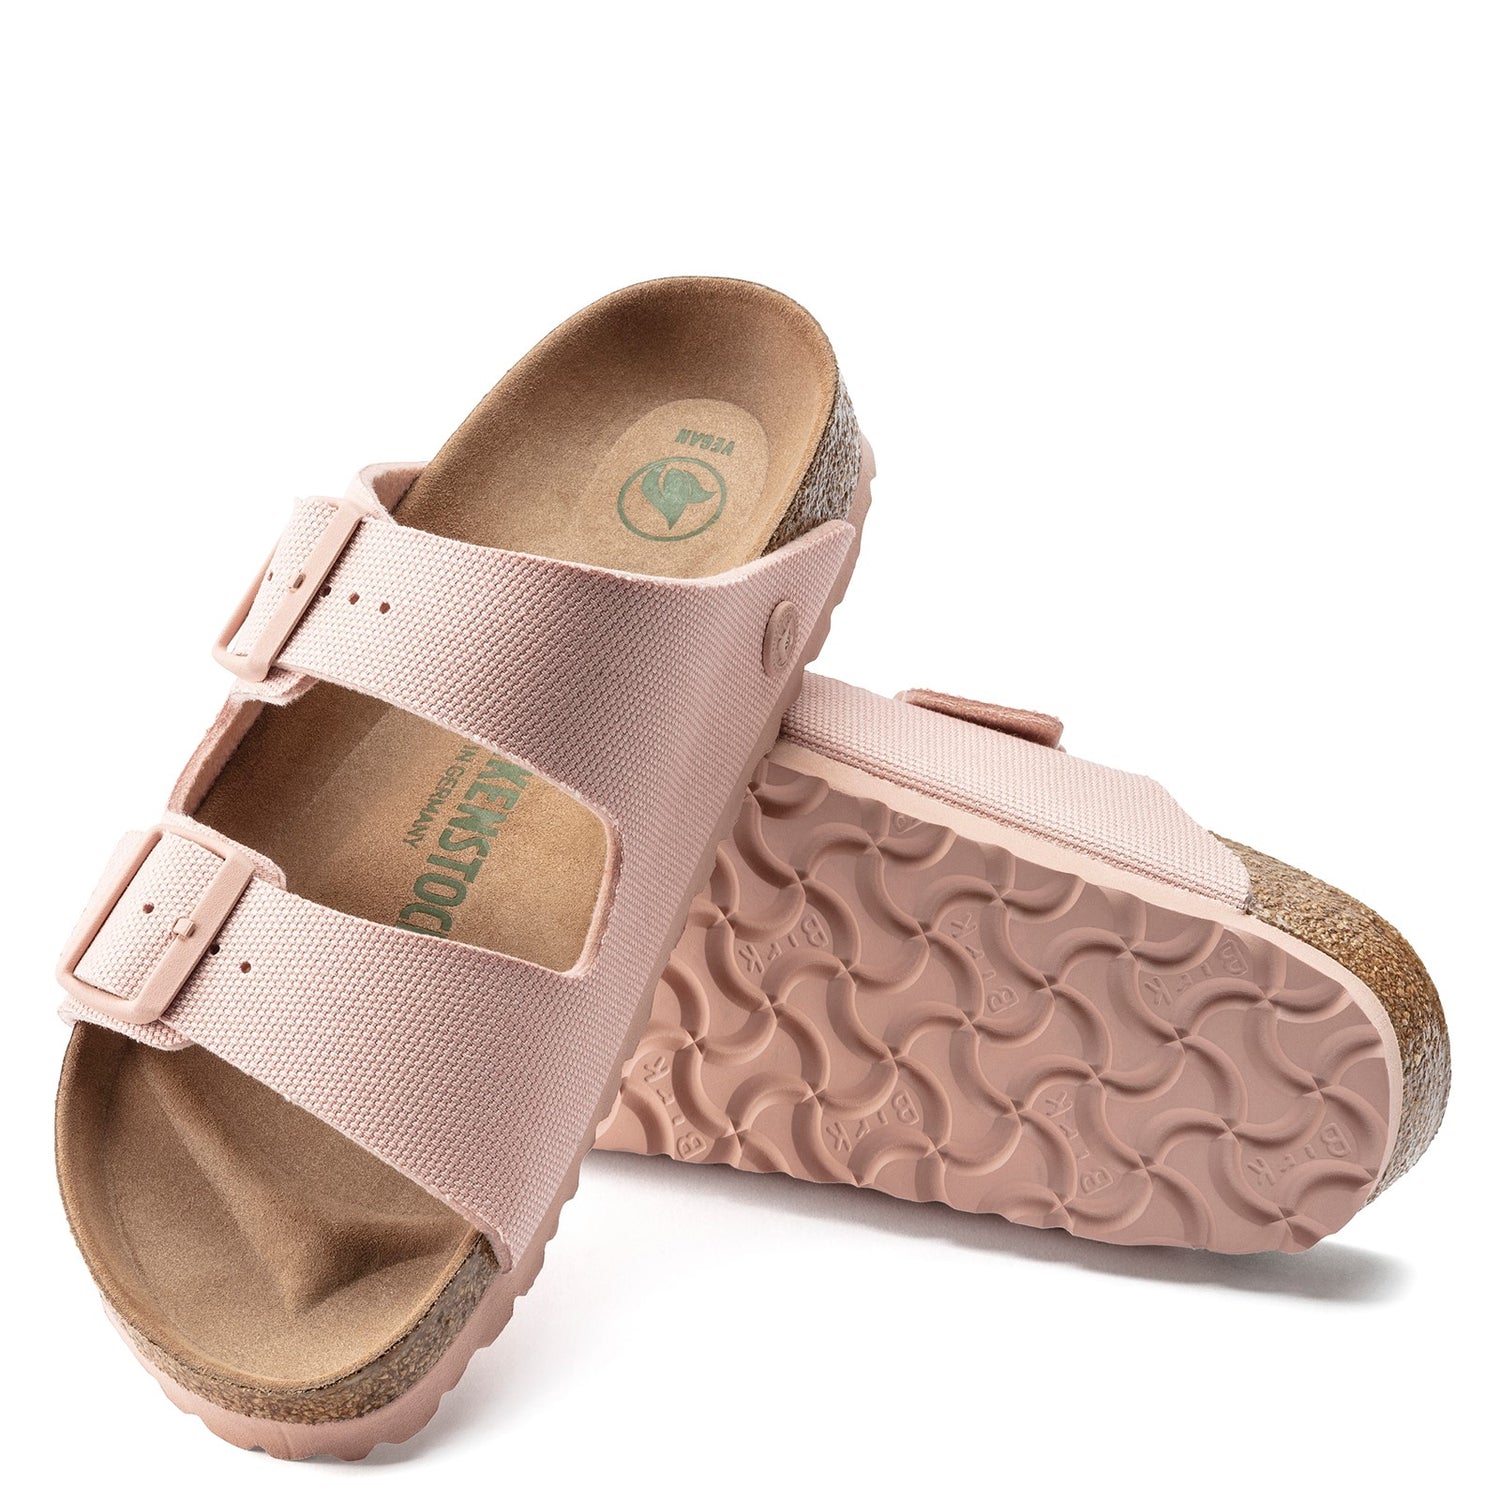 Peltz Shoes  Women's Birkenstock Arizona Vegan Slide Sandal - Narrow Width SOFT PINK 1021 473 N